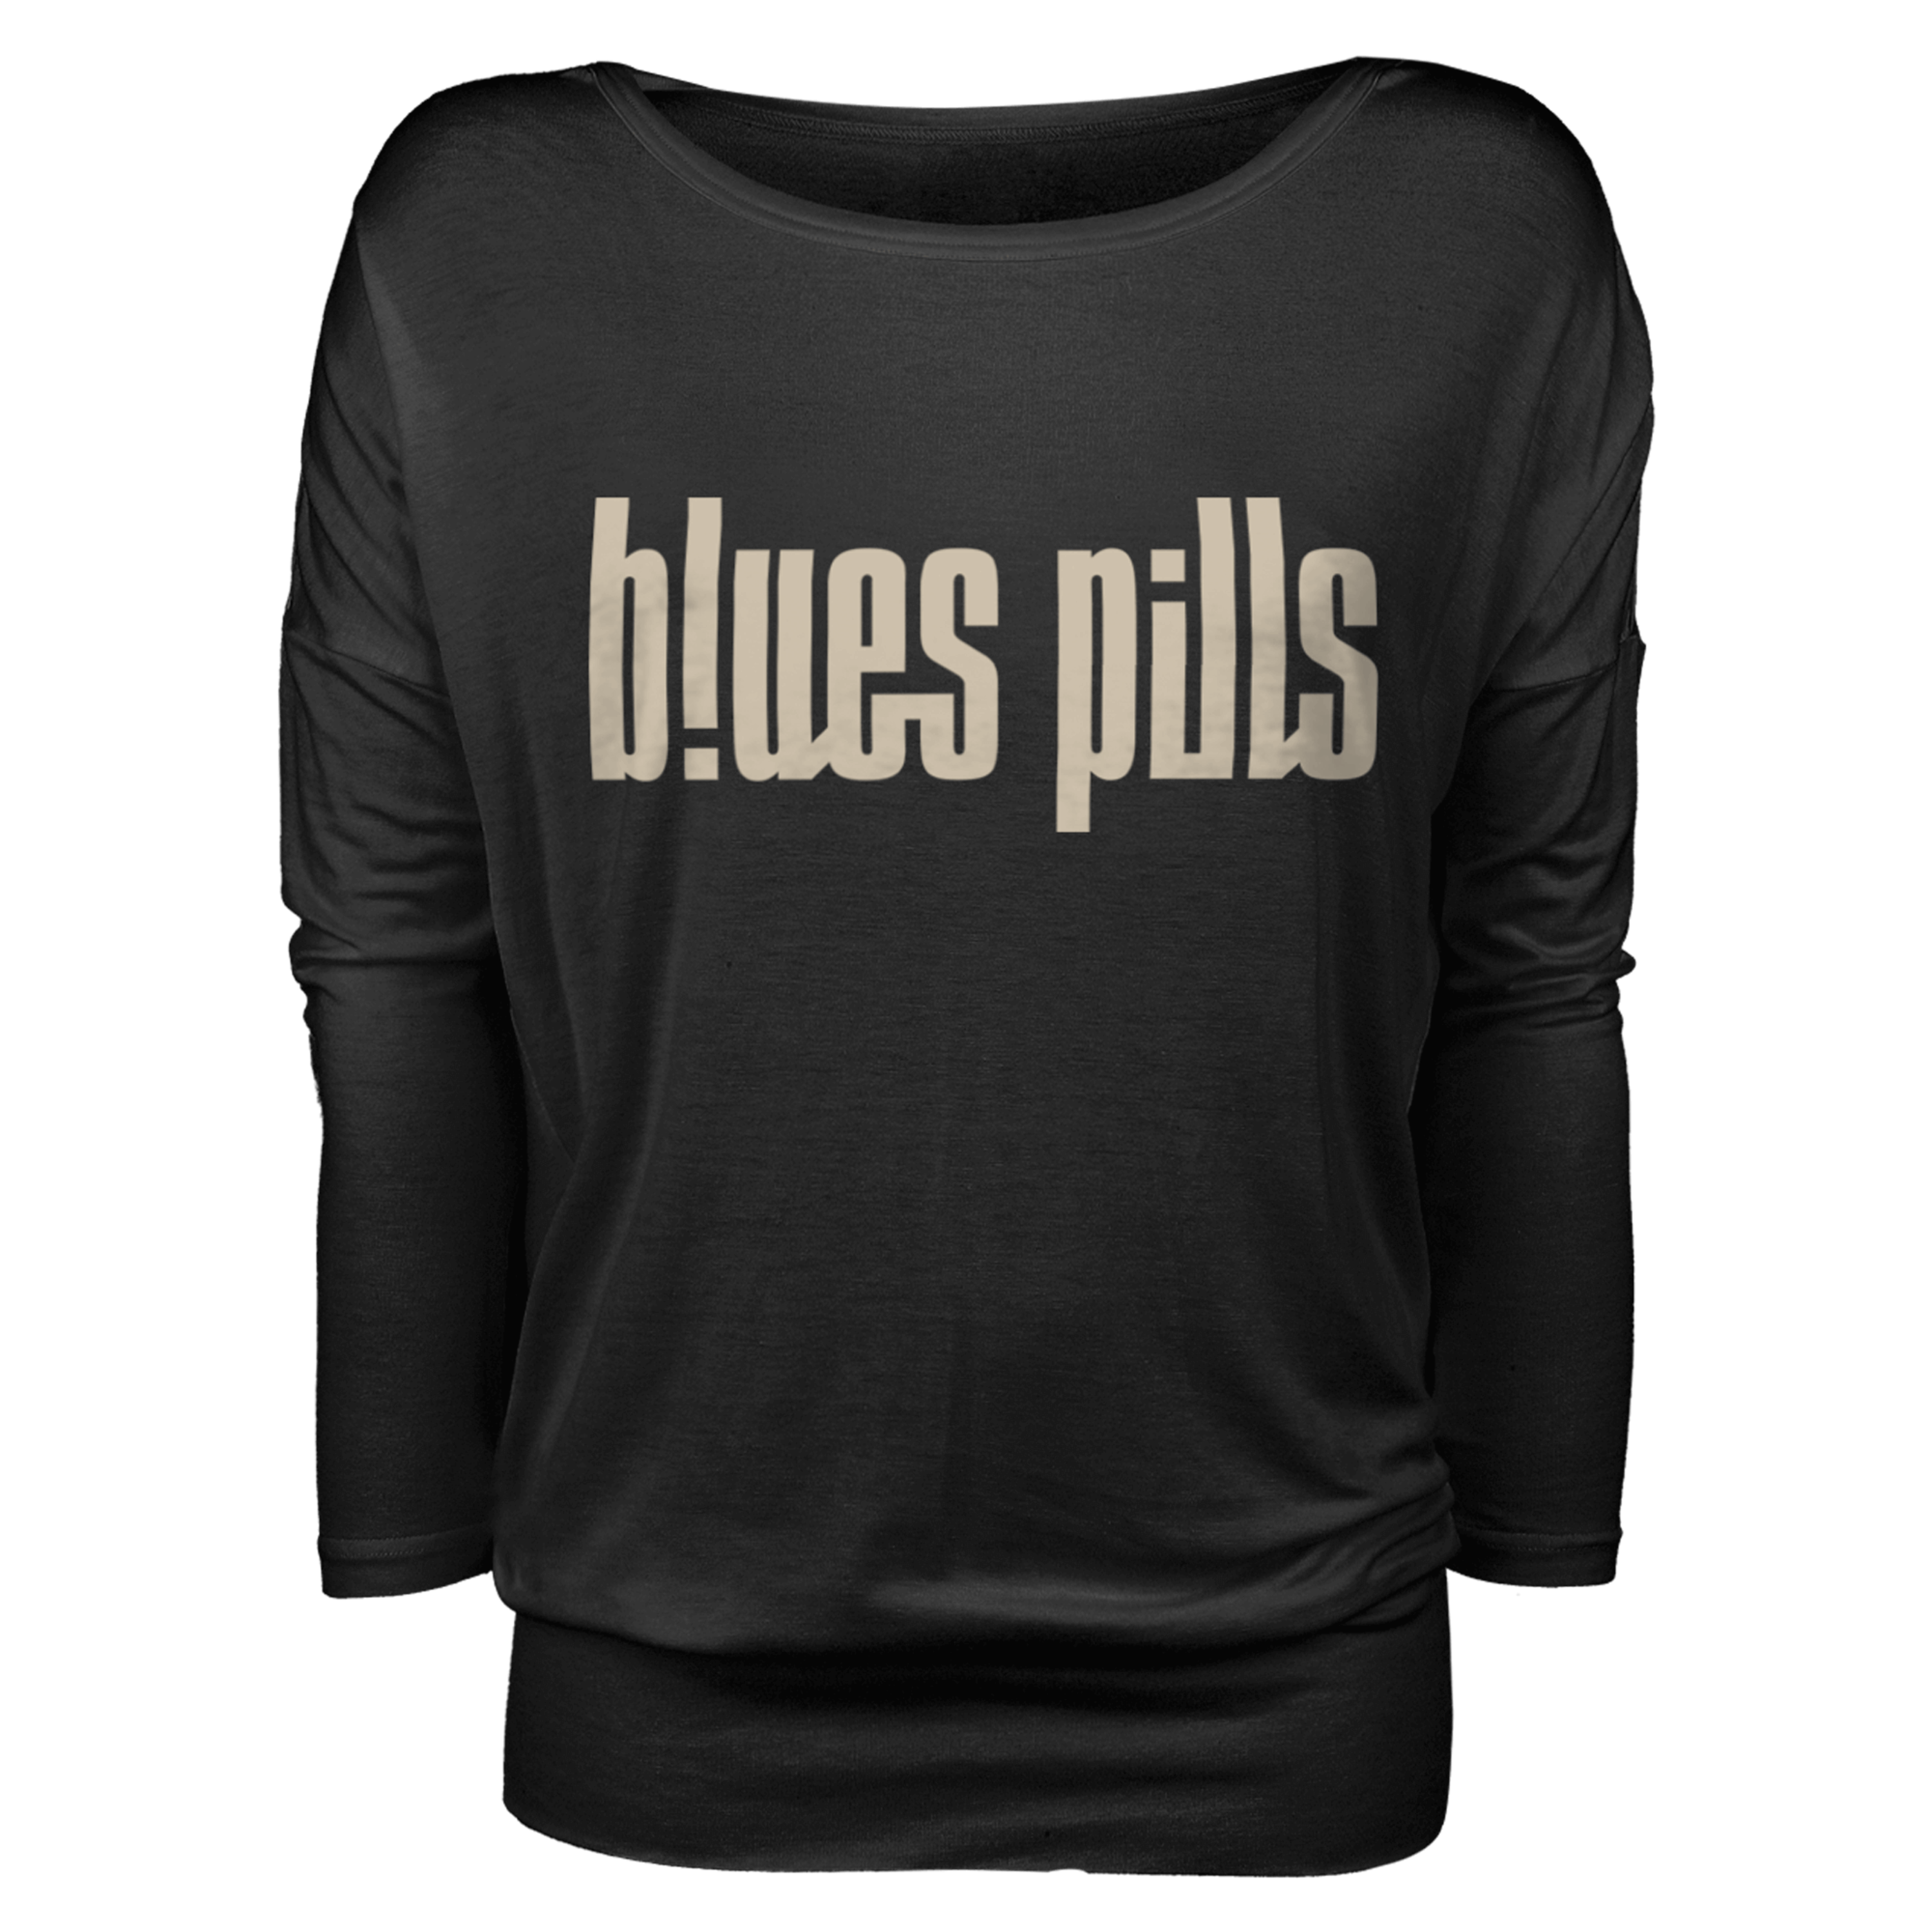 https://images.bravado.de/prod/product-assets/product-asset-data/blues-pills/blues-pills/products/132646/web/21901/image-thumb__21901__3000x3000_original/Blues-Pills-Logo-discharge-Longsleeves-schwarz-132646-21901.png